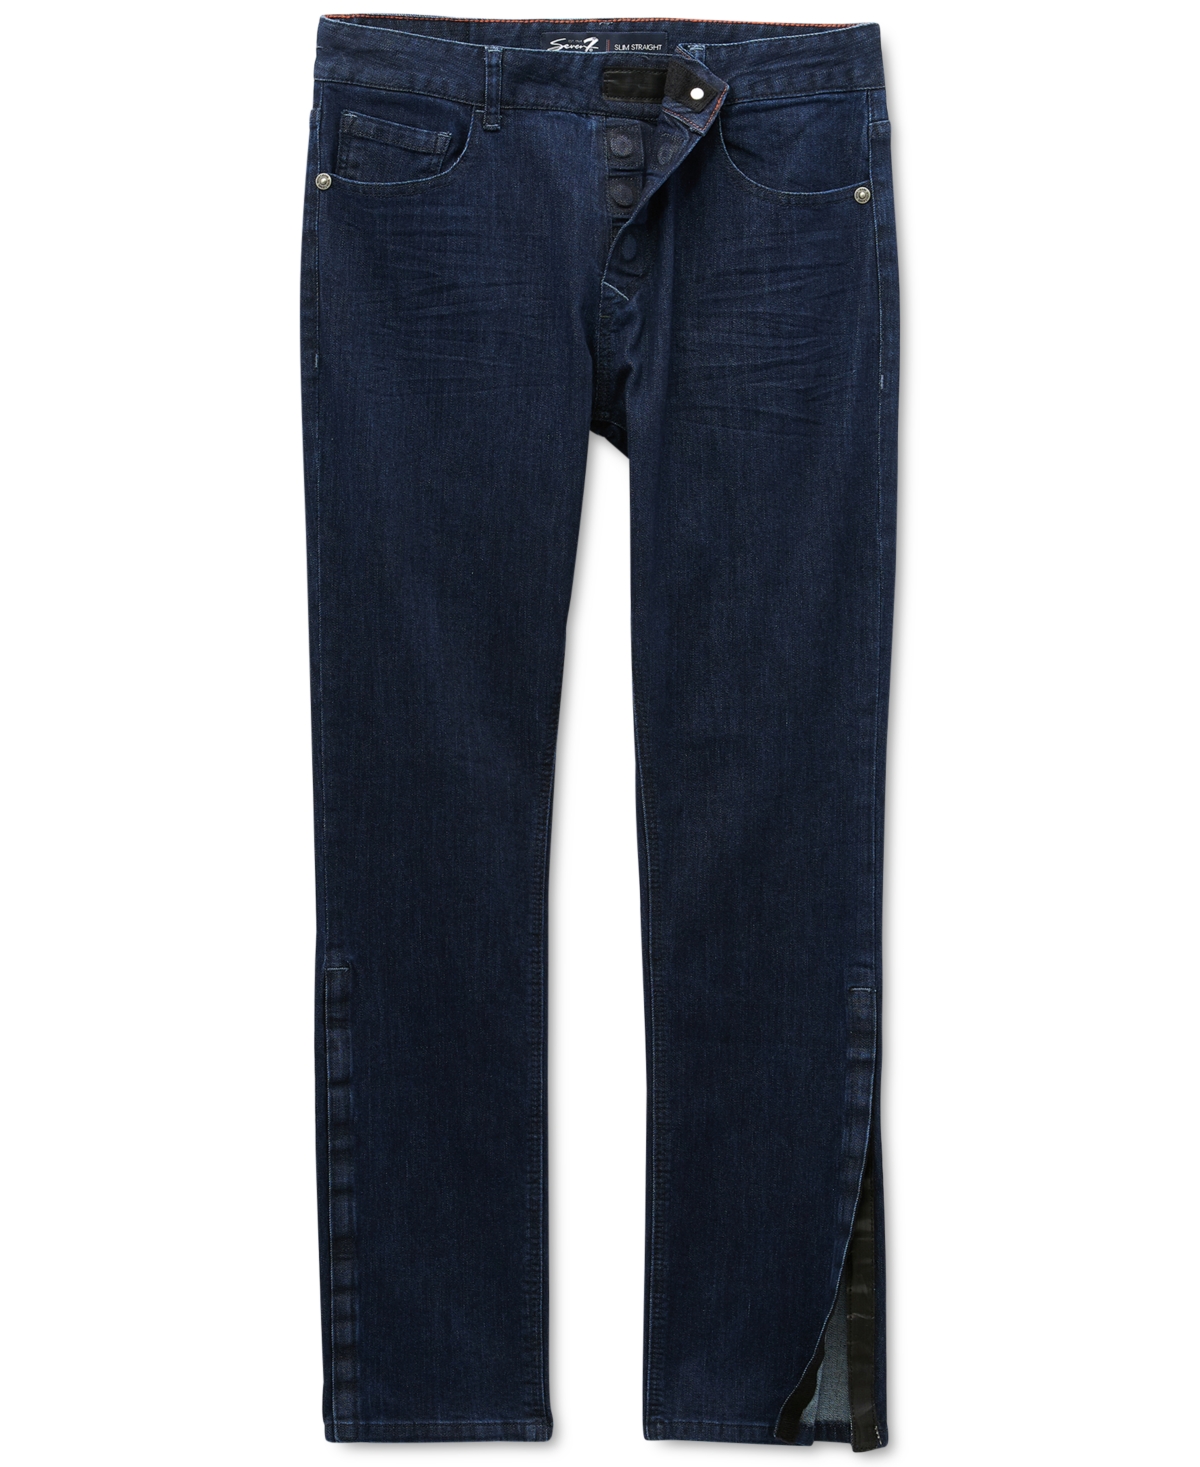 Men's Vouvant Adaptive Slim-Straight Fit Power Stretch Textured Jeans - Blue Rinse